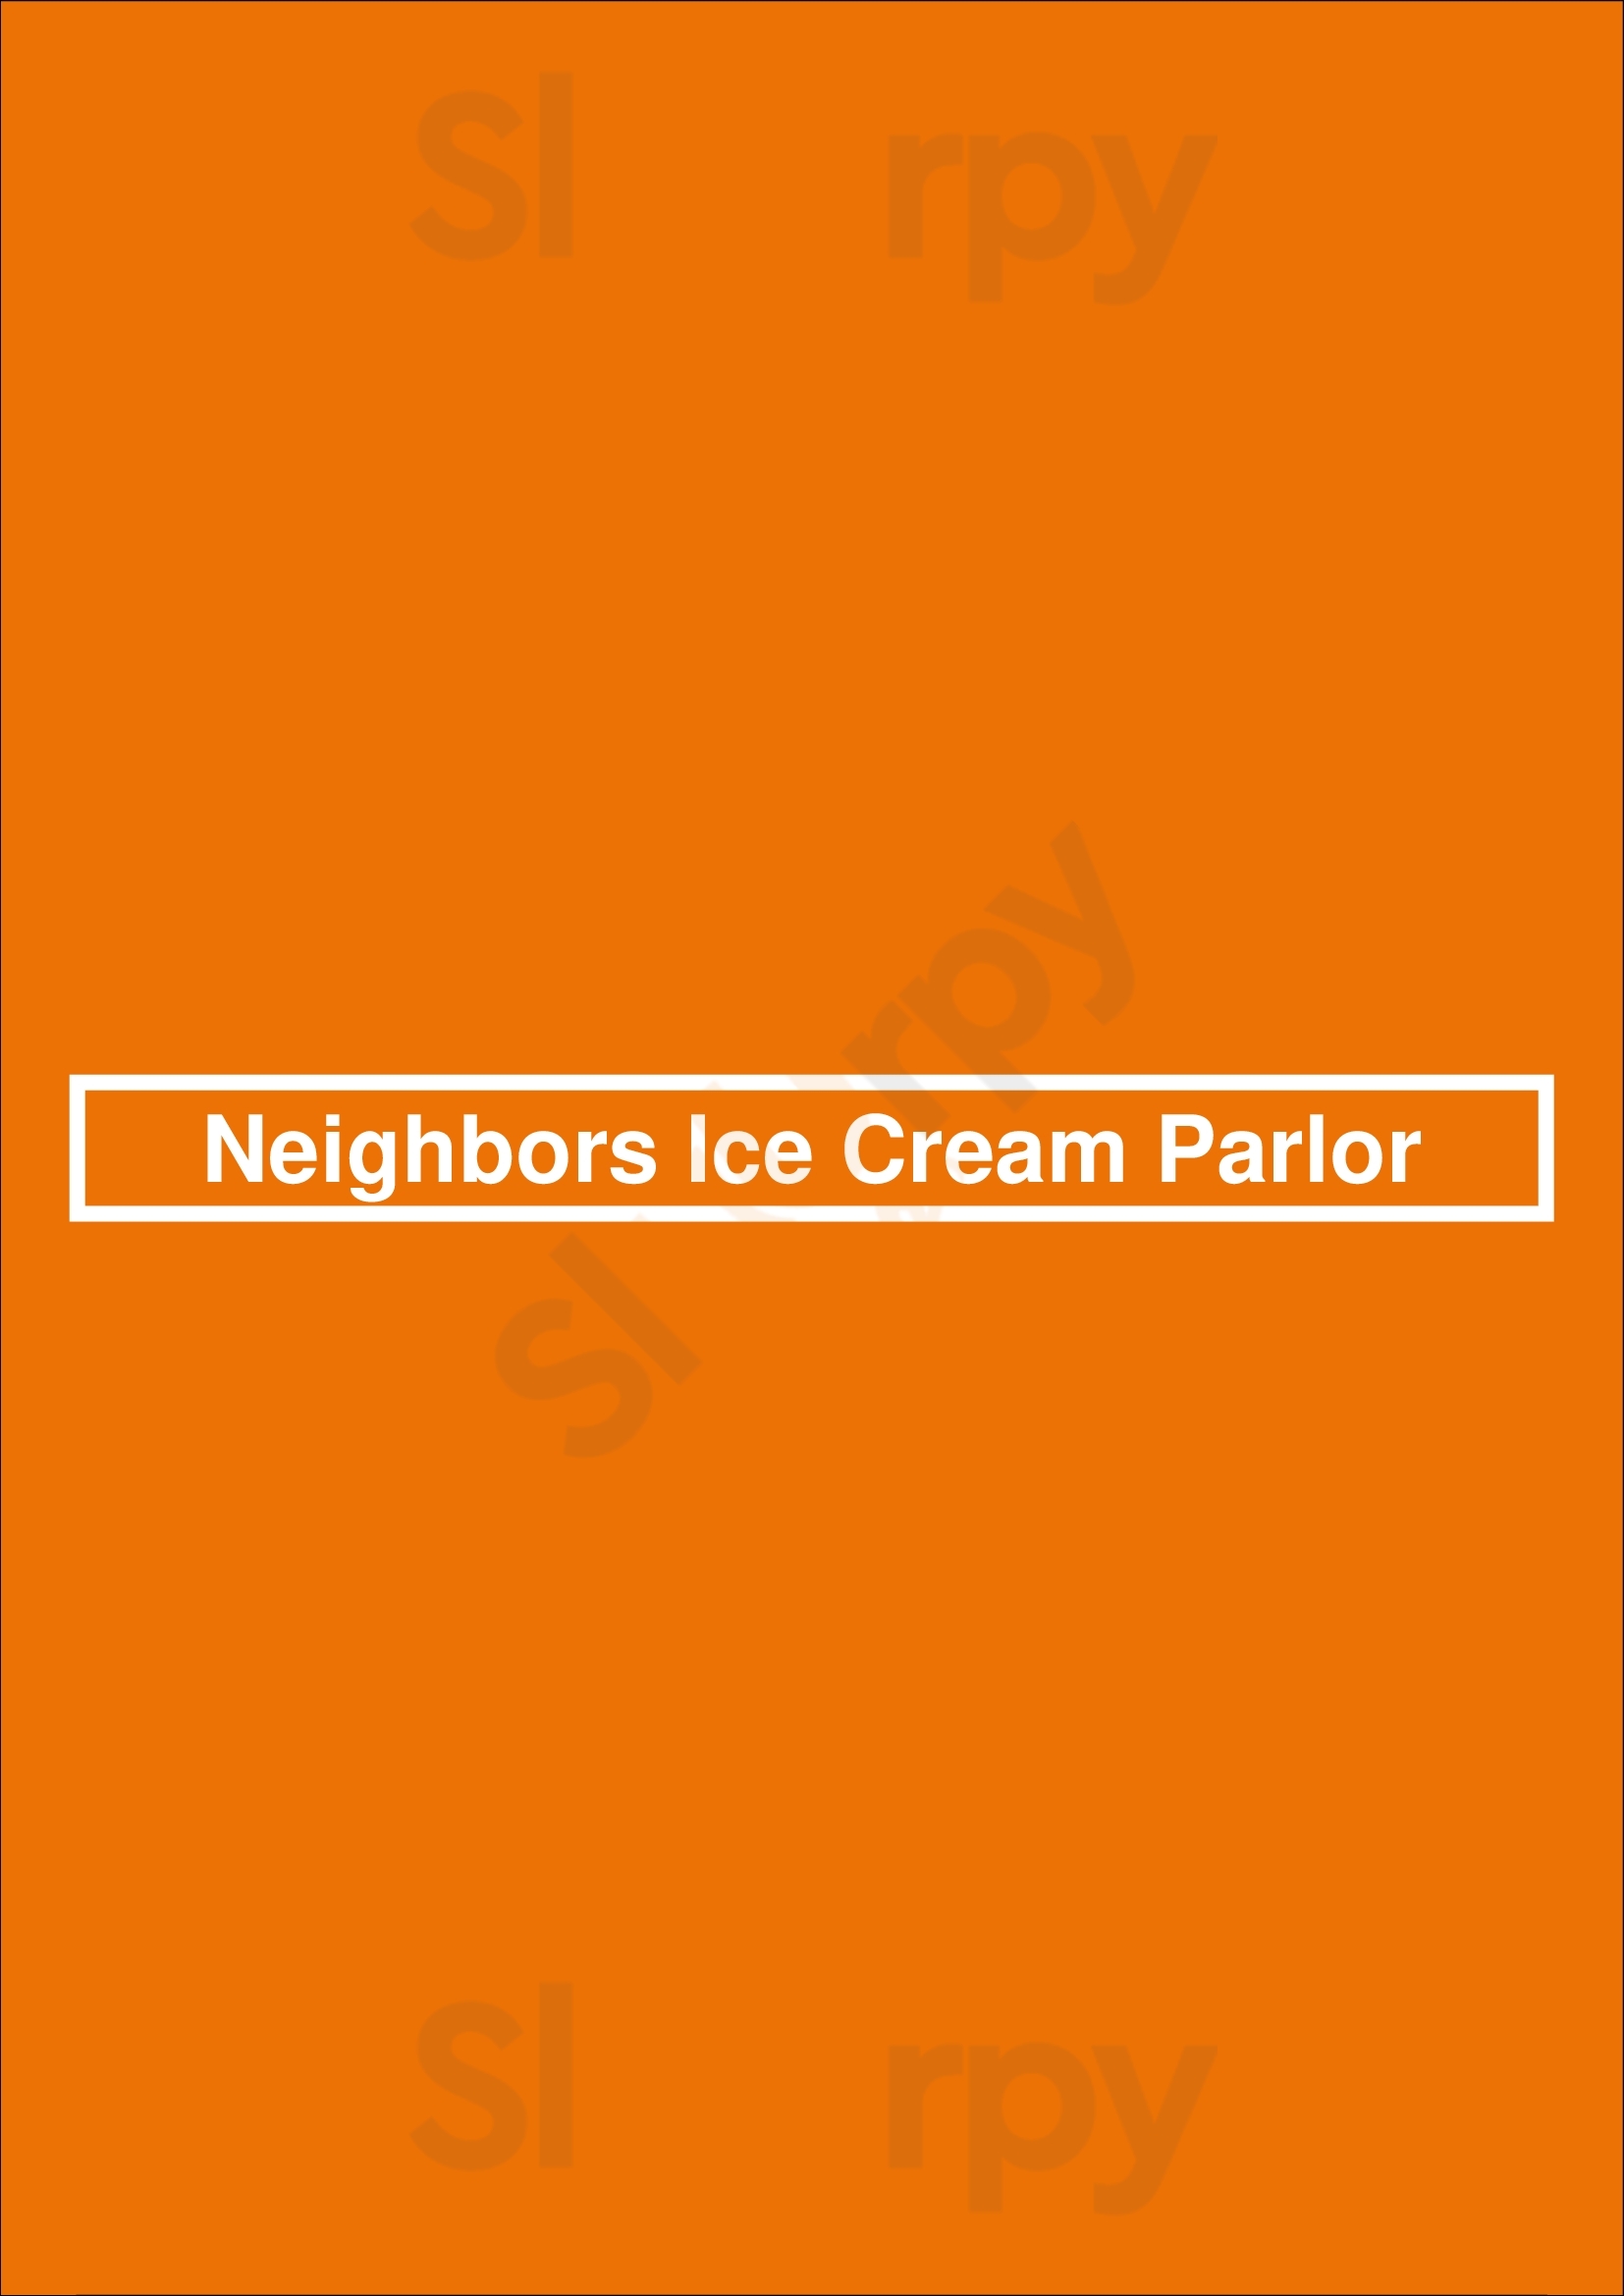 Neighbors Ice Cream Parlor Port Orange Menu - 1